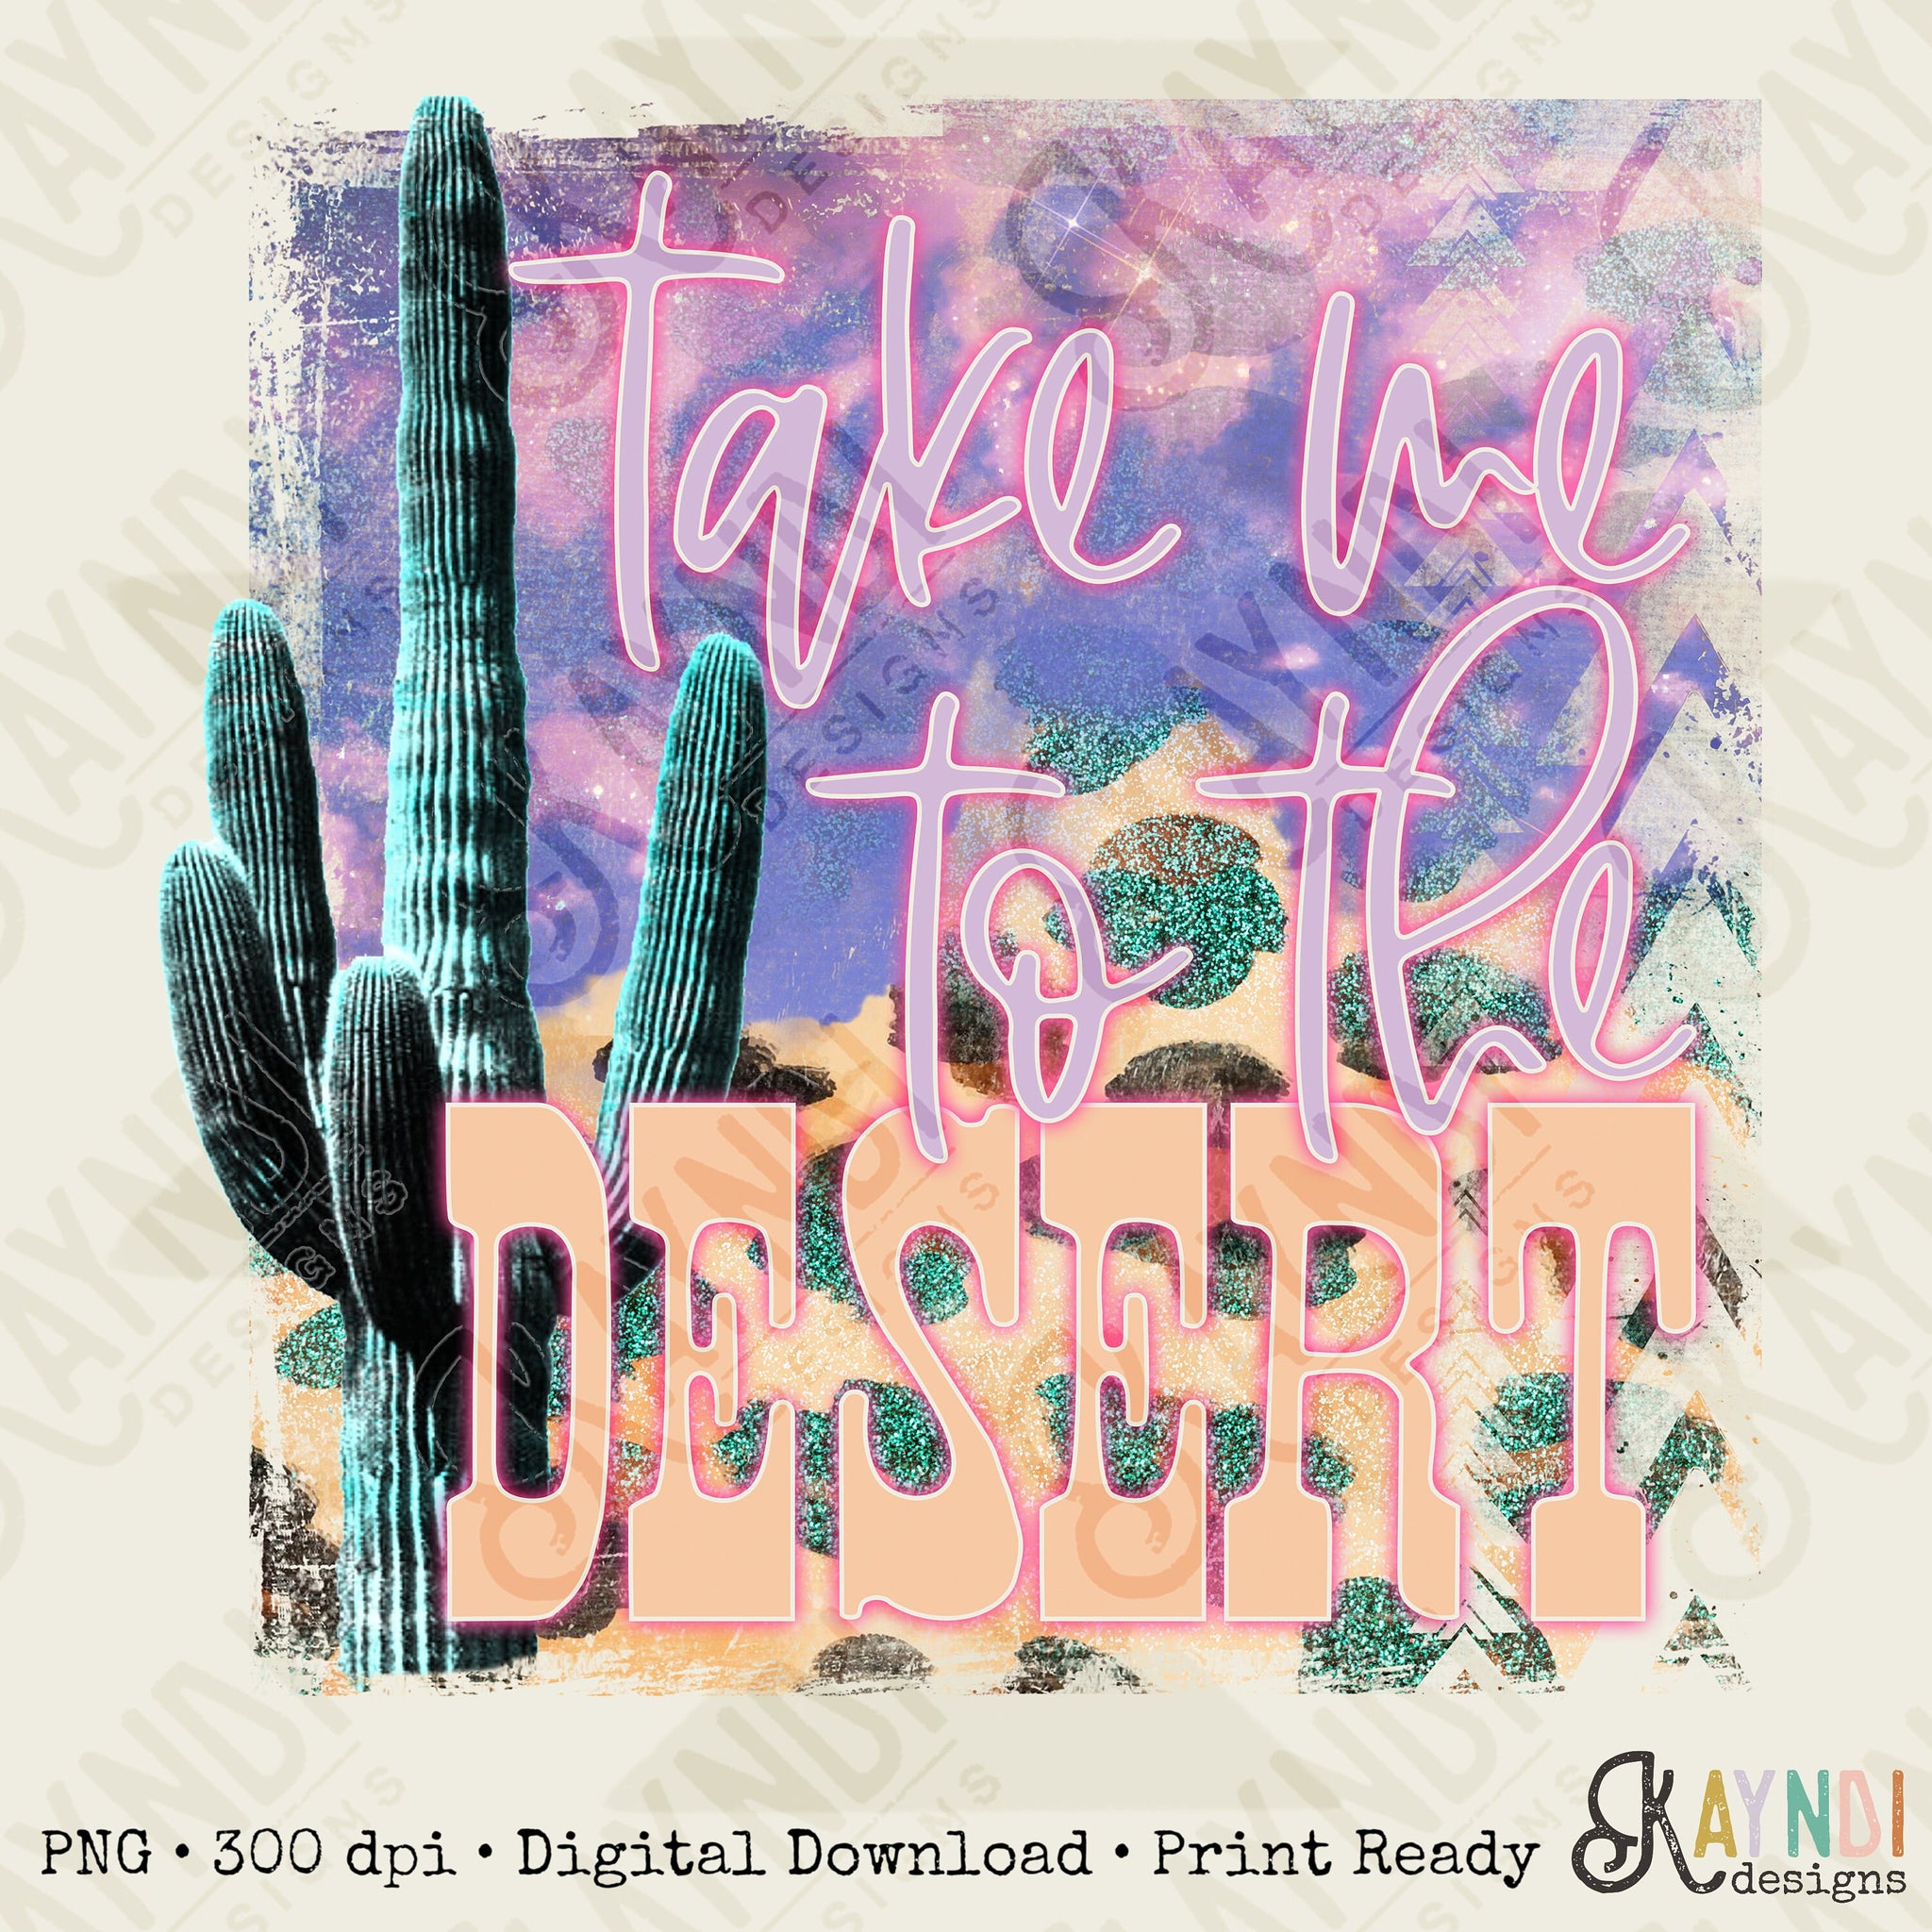 Take me to the desert Sublimation Design PNG Digital Download Printable